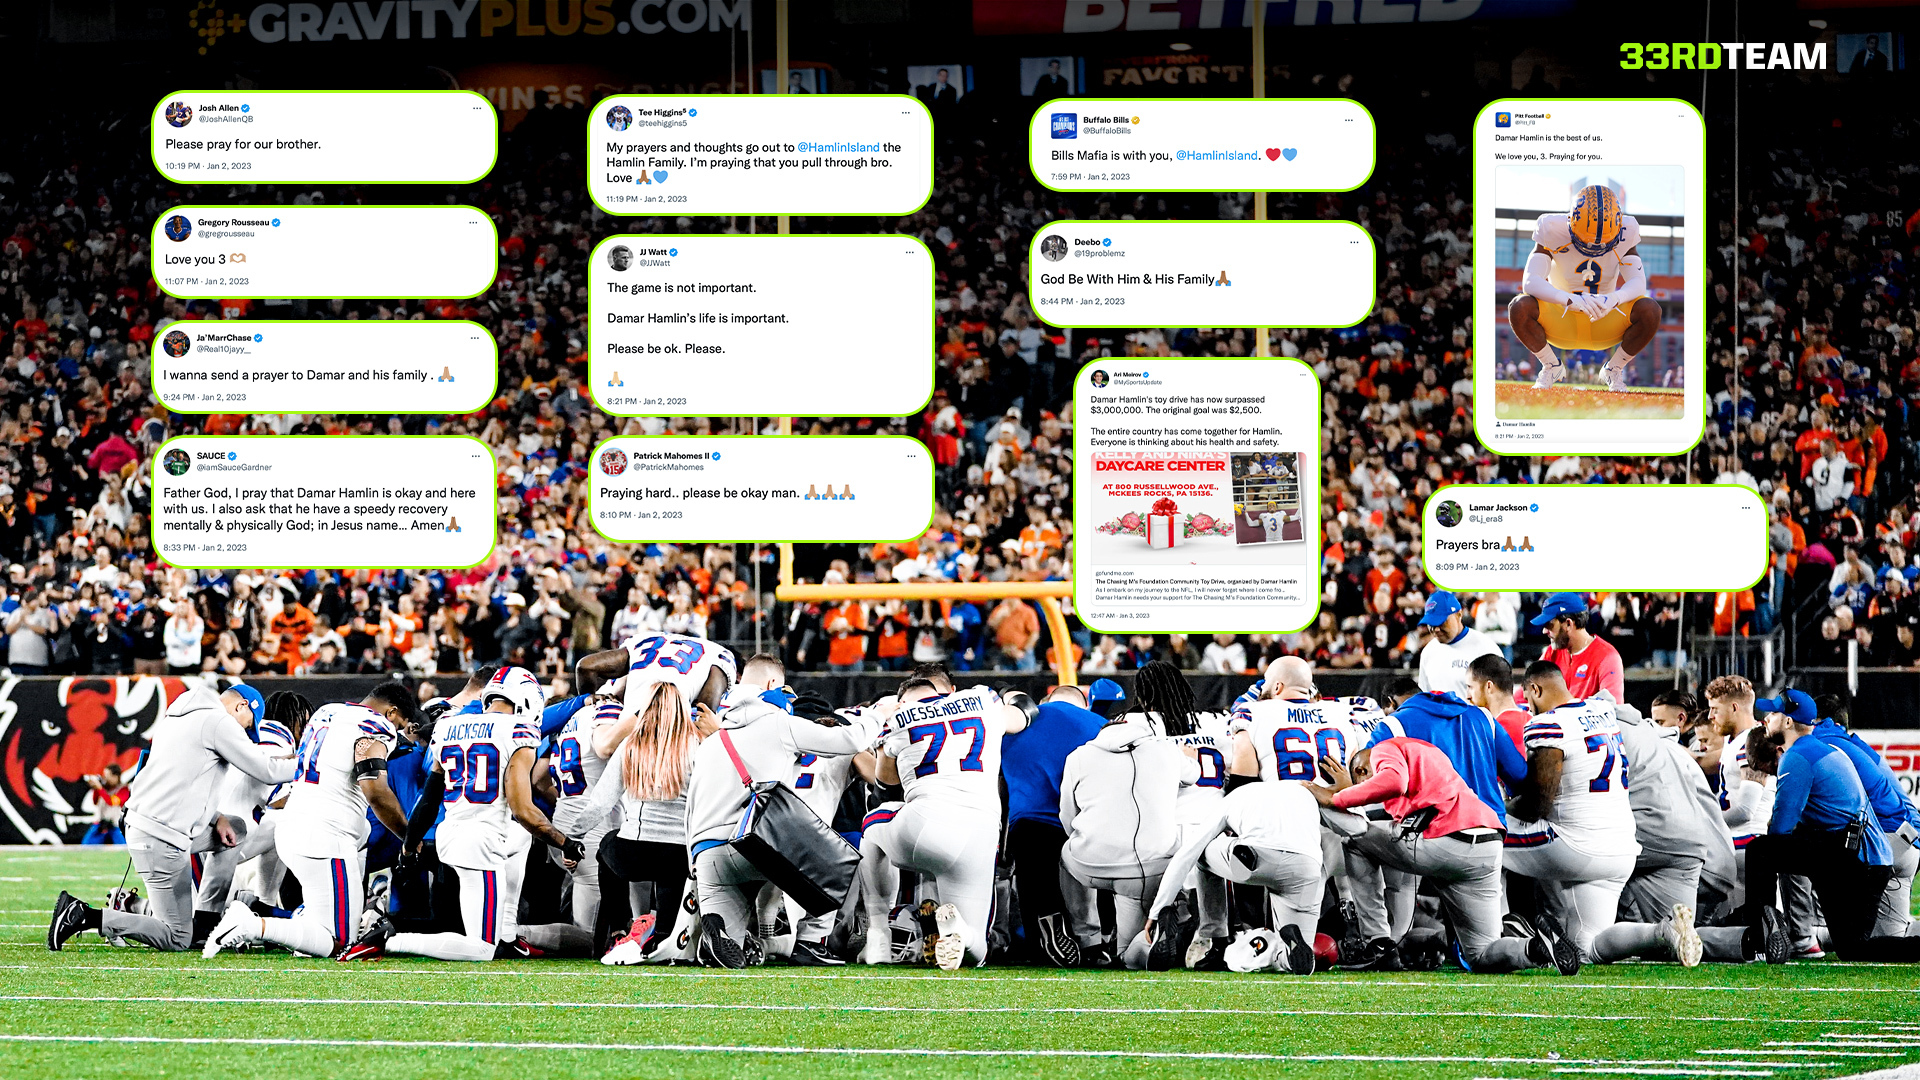 NFL Fans, Football Community Show Wide Array of Love, Support for Damar Hamlin